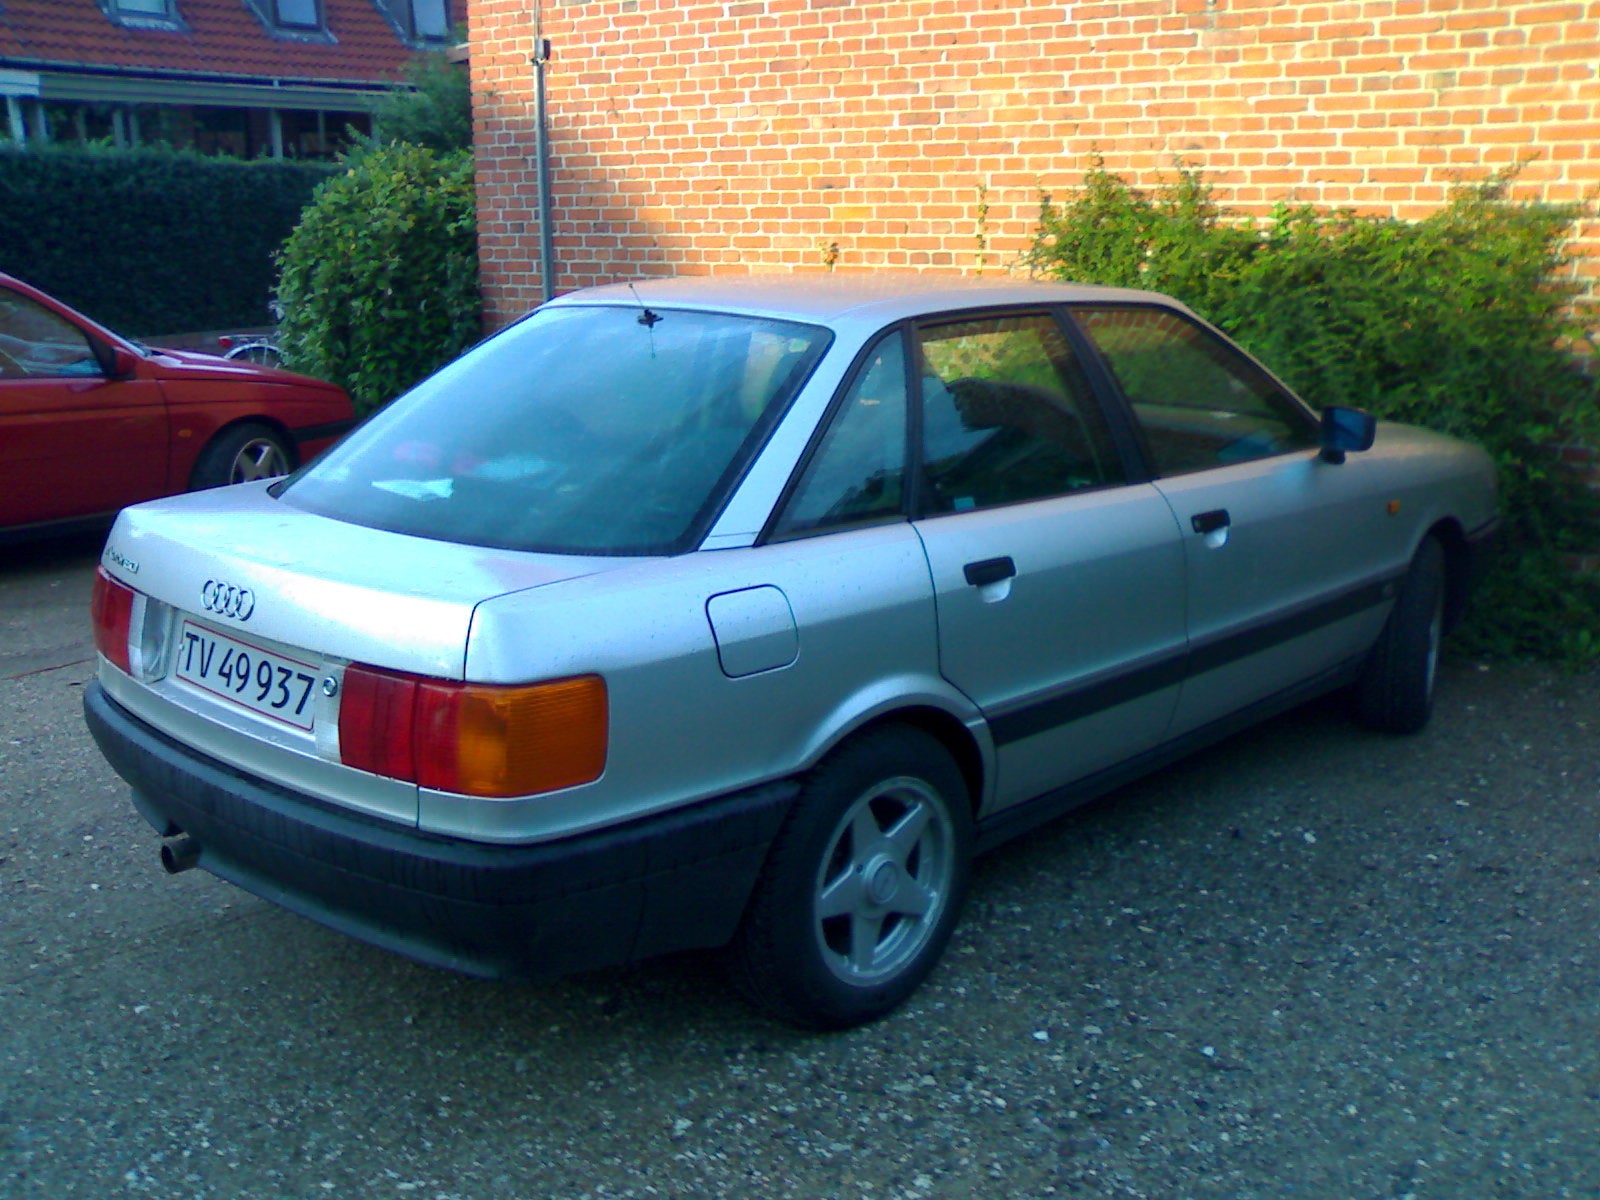 1990 Audi 80 - Other Pictures - CarGurus